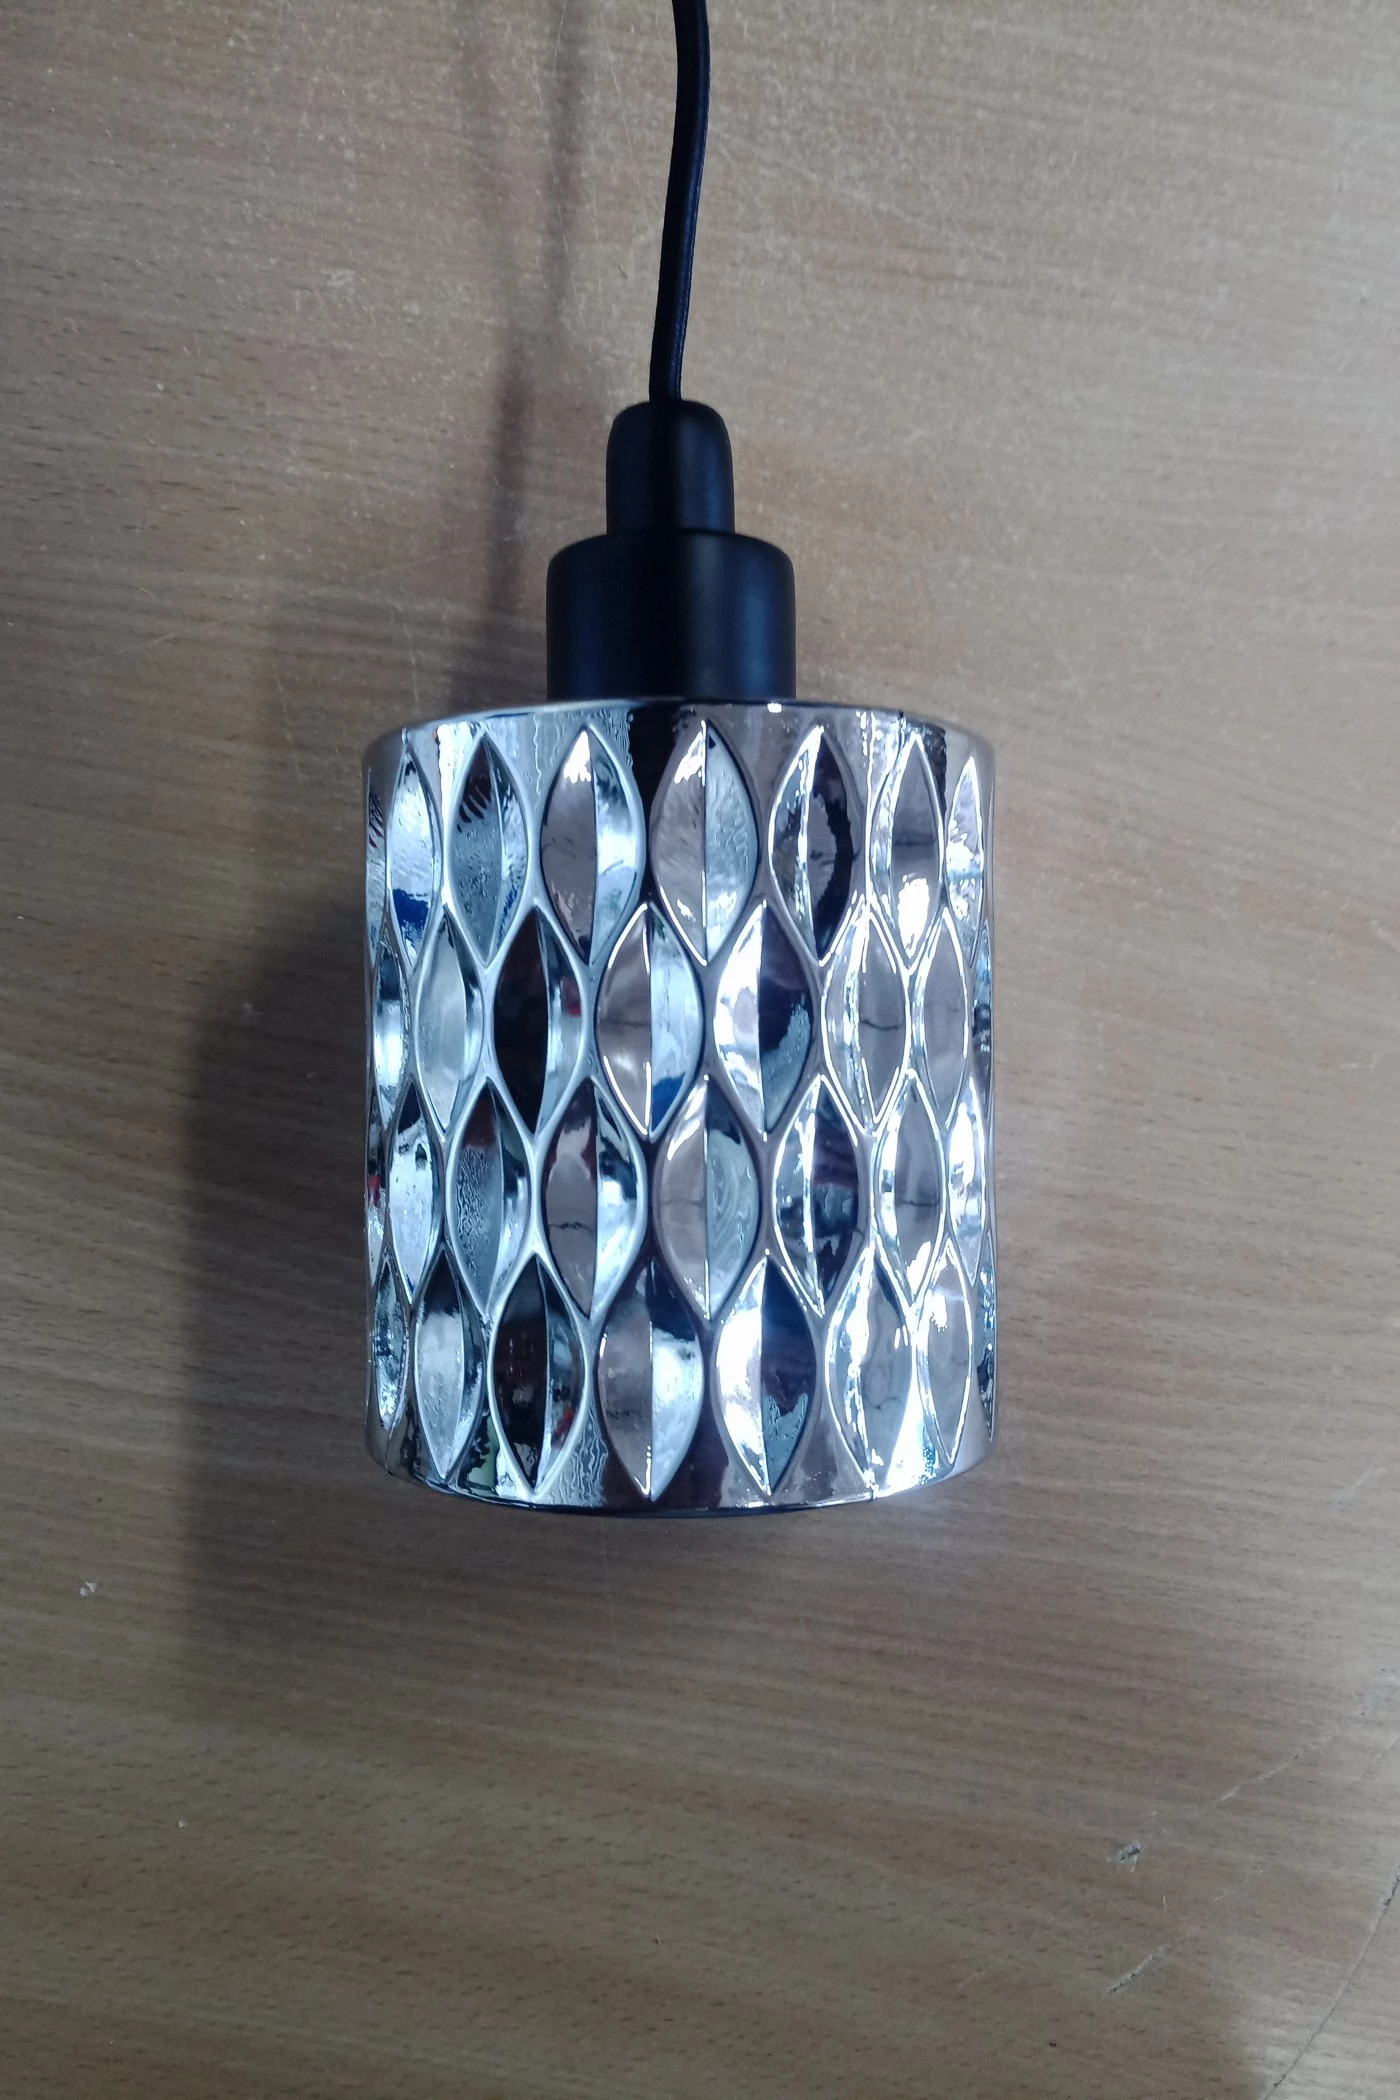   
                        
                        Люстра NORDLUX (Дания) 19836    
                         в стиле Модерн.  
                        Тип источника света: светодиодная лампа, сменная.                         Форма: Цилиндр.                         Цвета плафонов и подвесок: Прозрачный.                         Материал: Стекло.                          фото 4